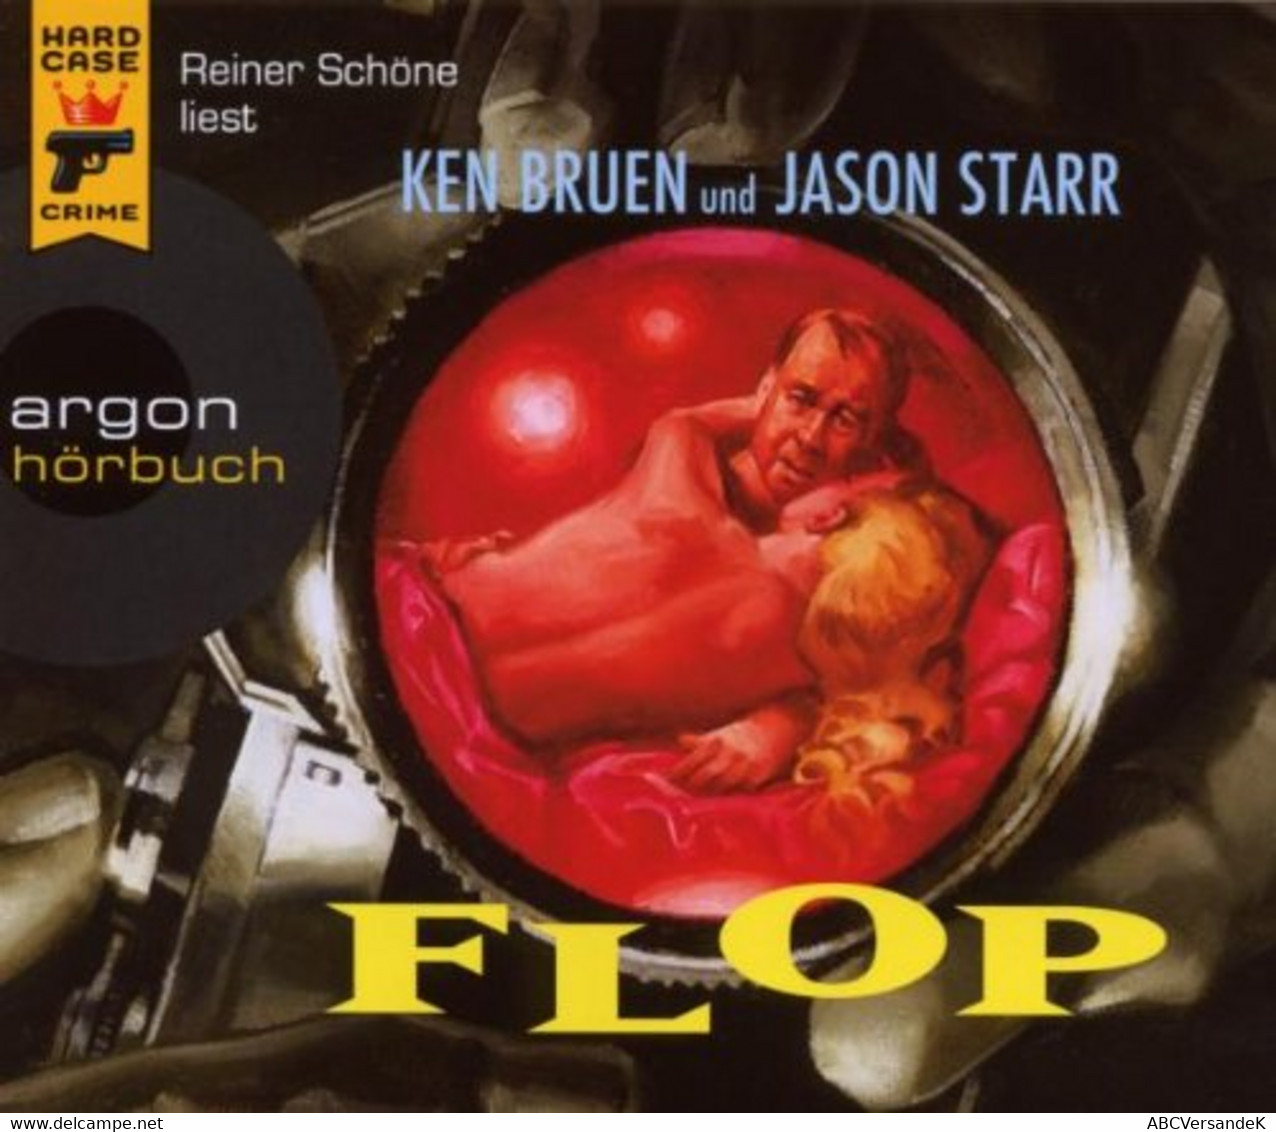 Flop - Argon Hörbuch - CDs